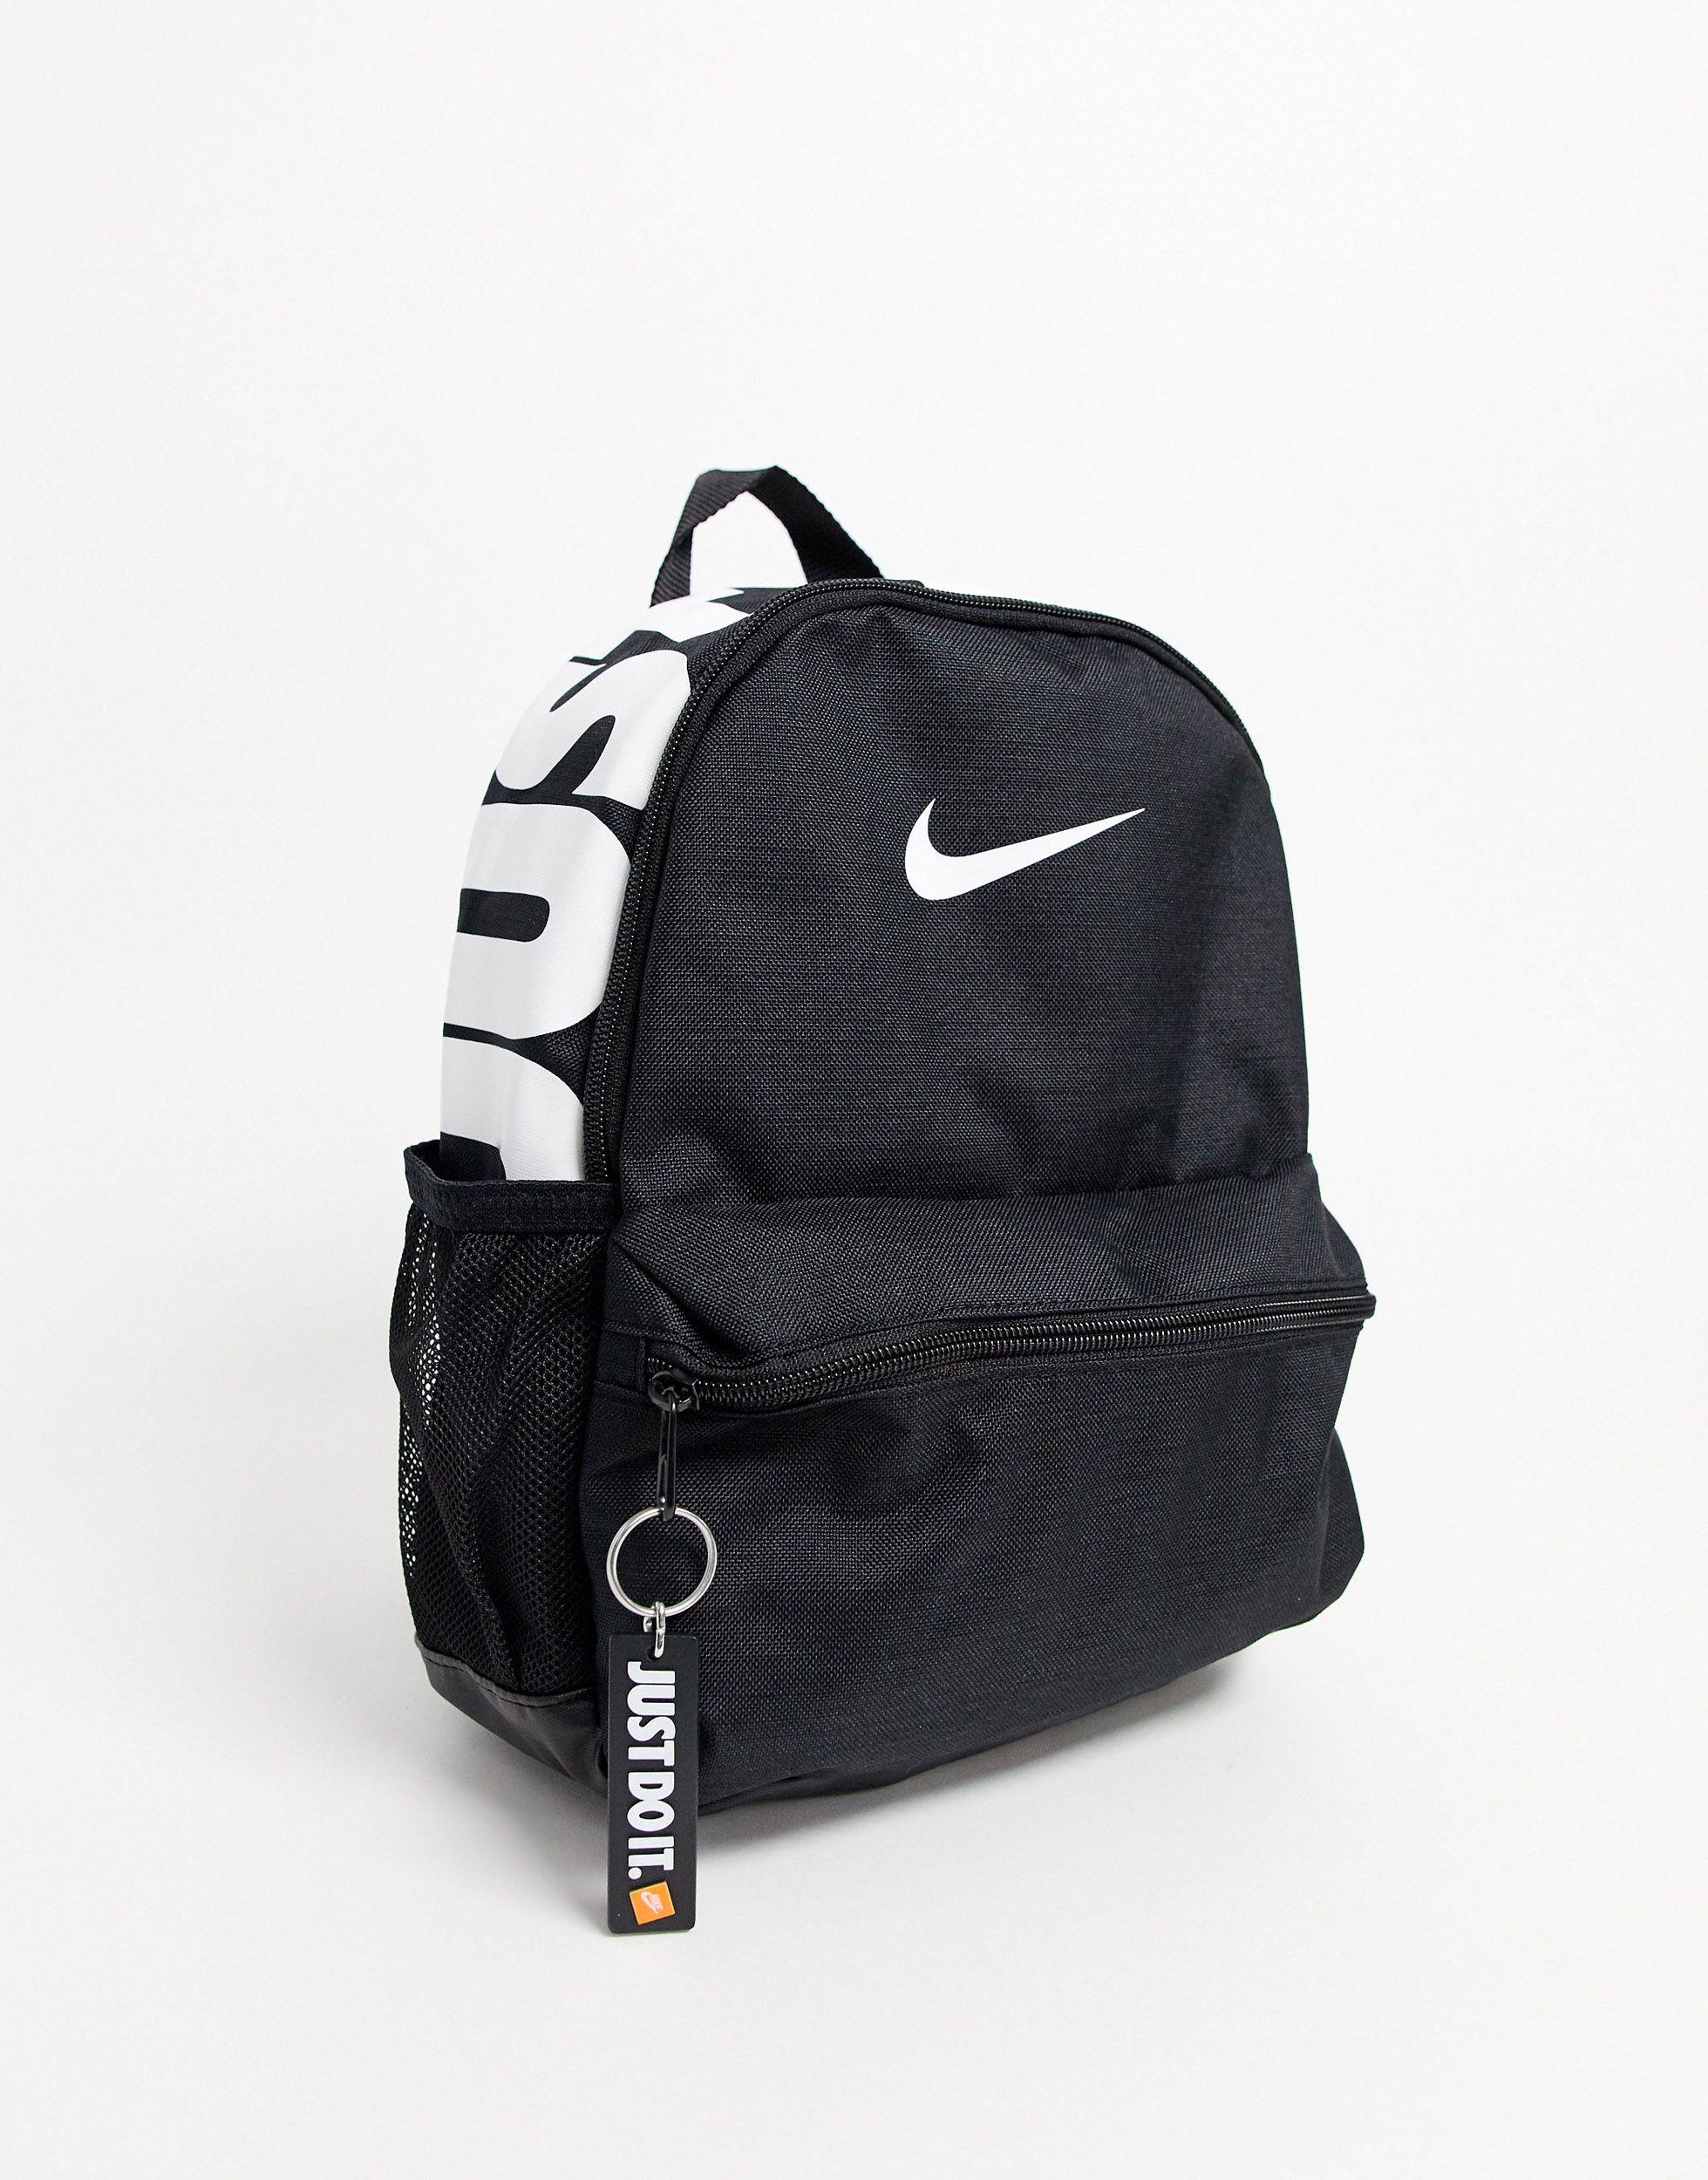 Black - Just do it - Petit sac à dos Nike | Lyst